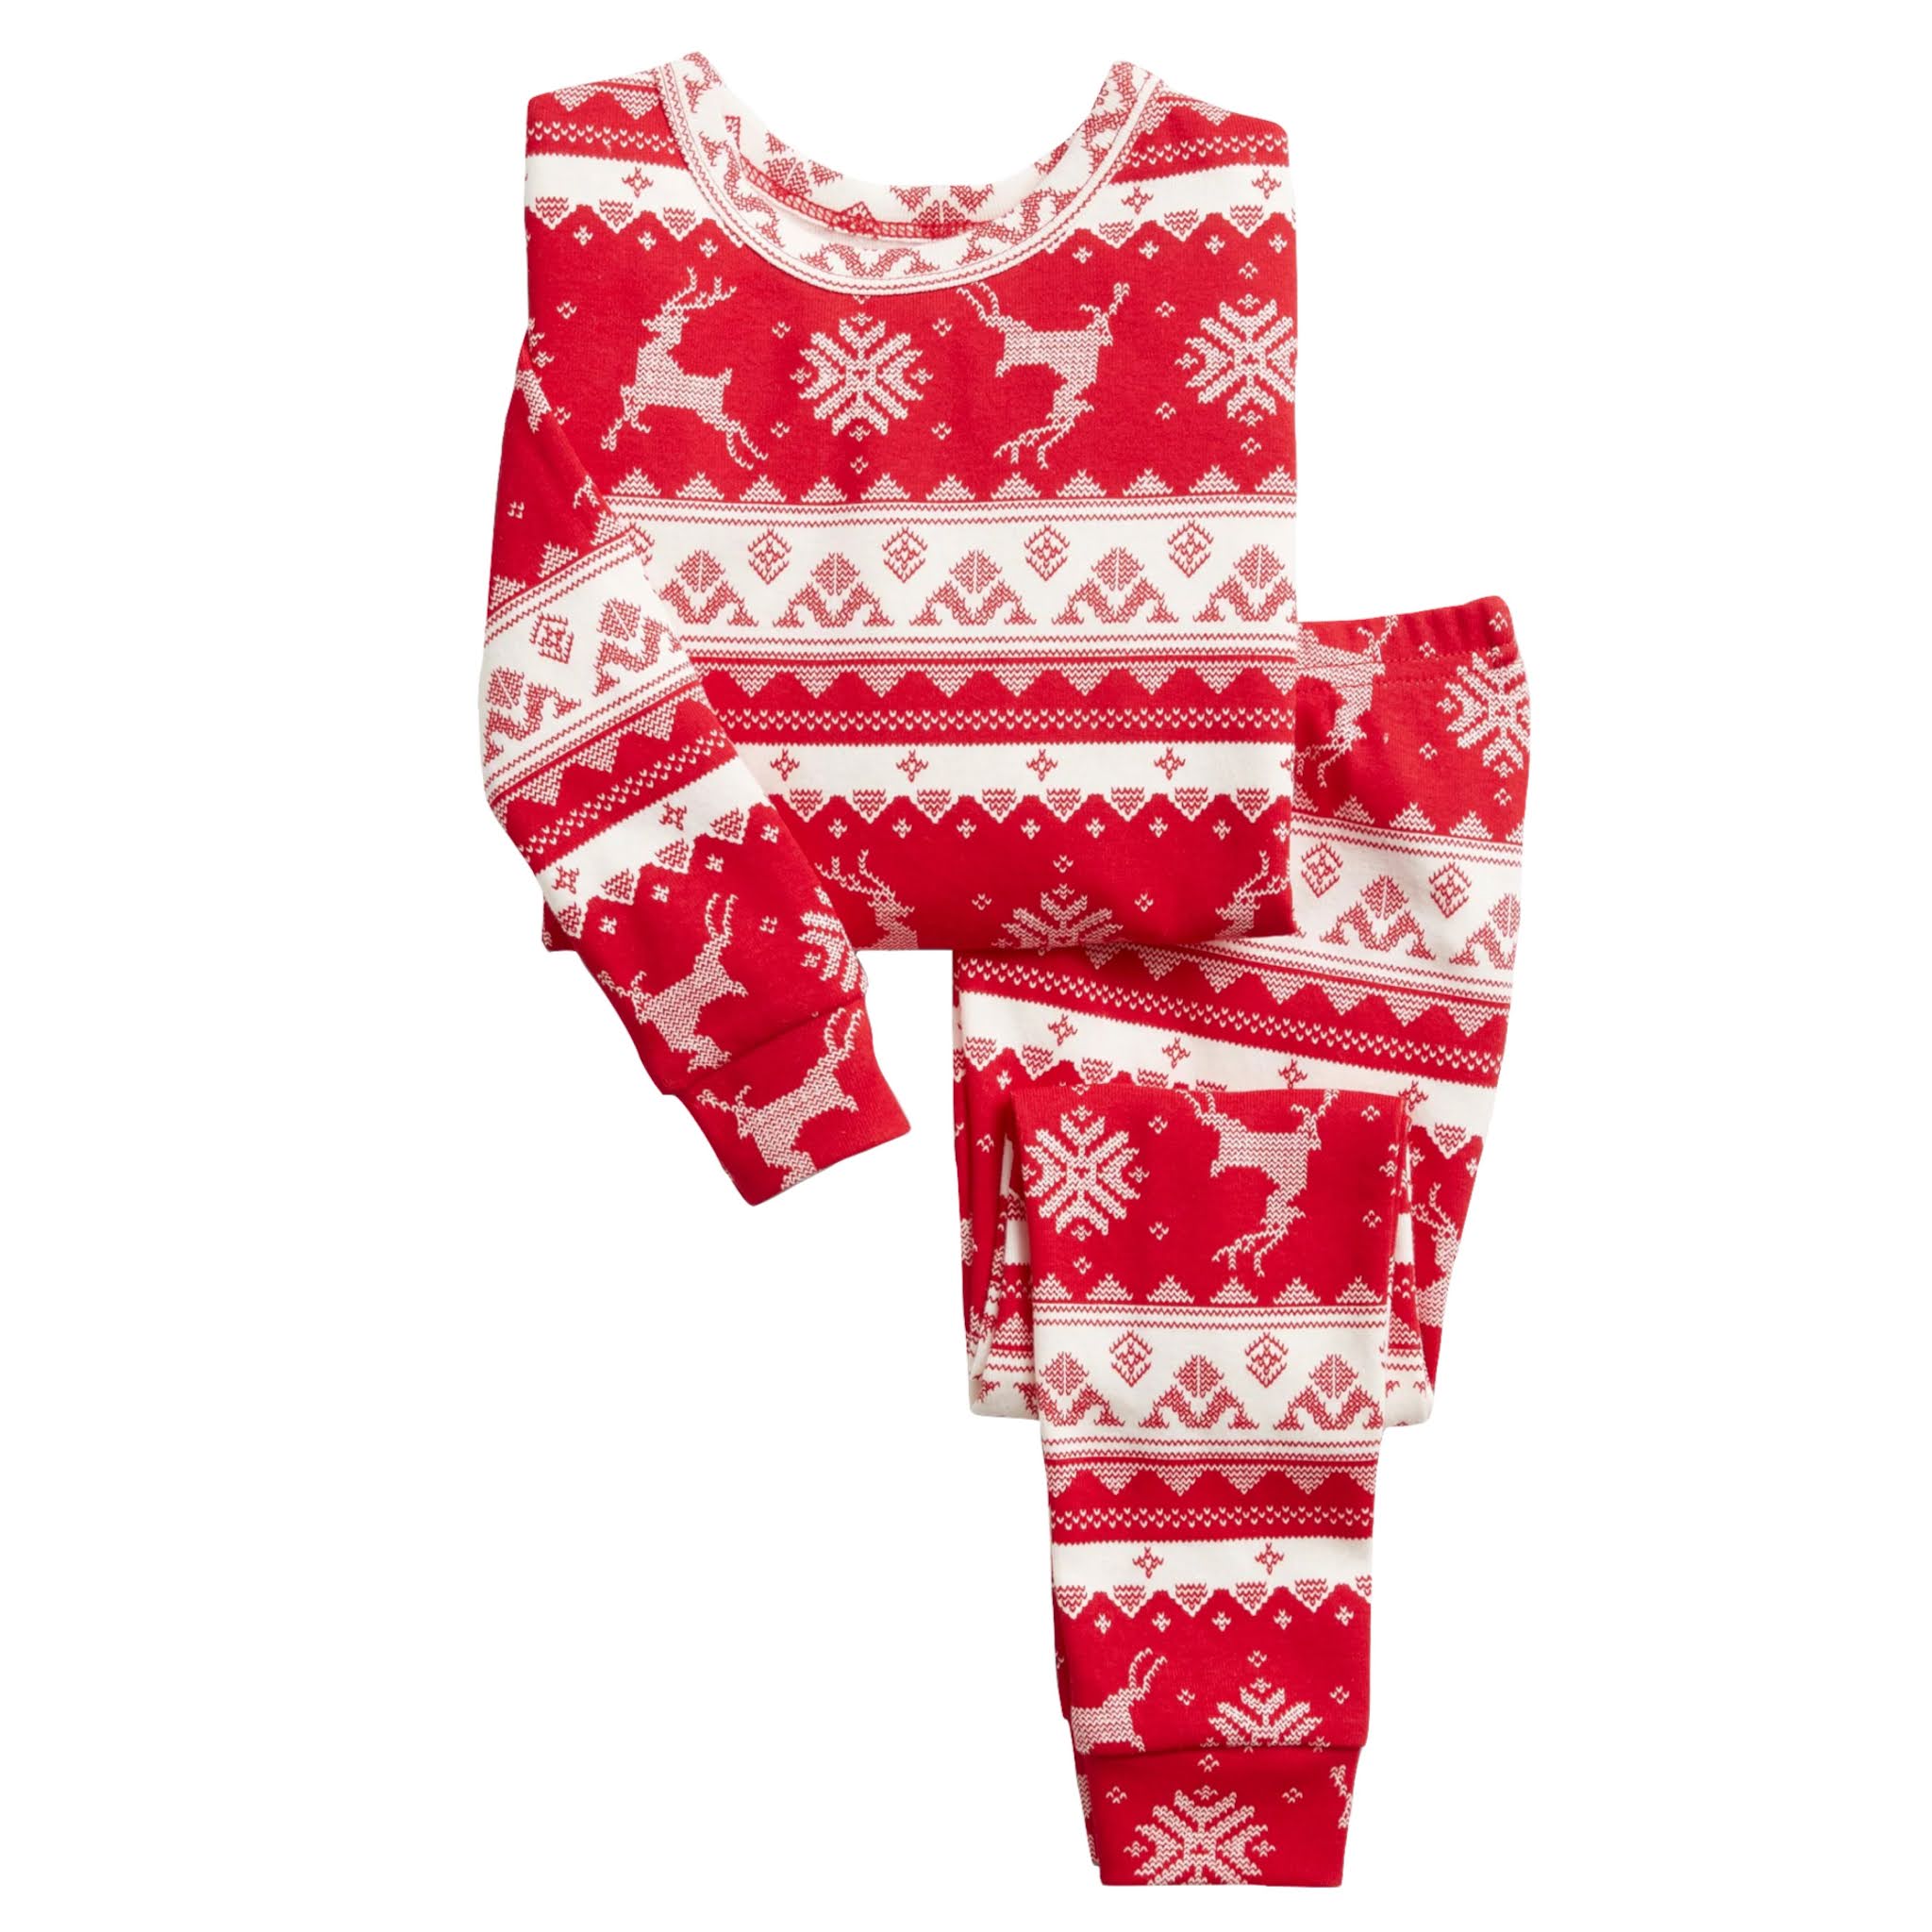 Toddler Red Christmas Pajamas from Gap Kids